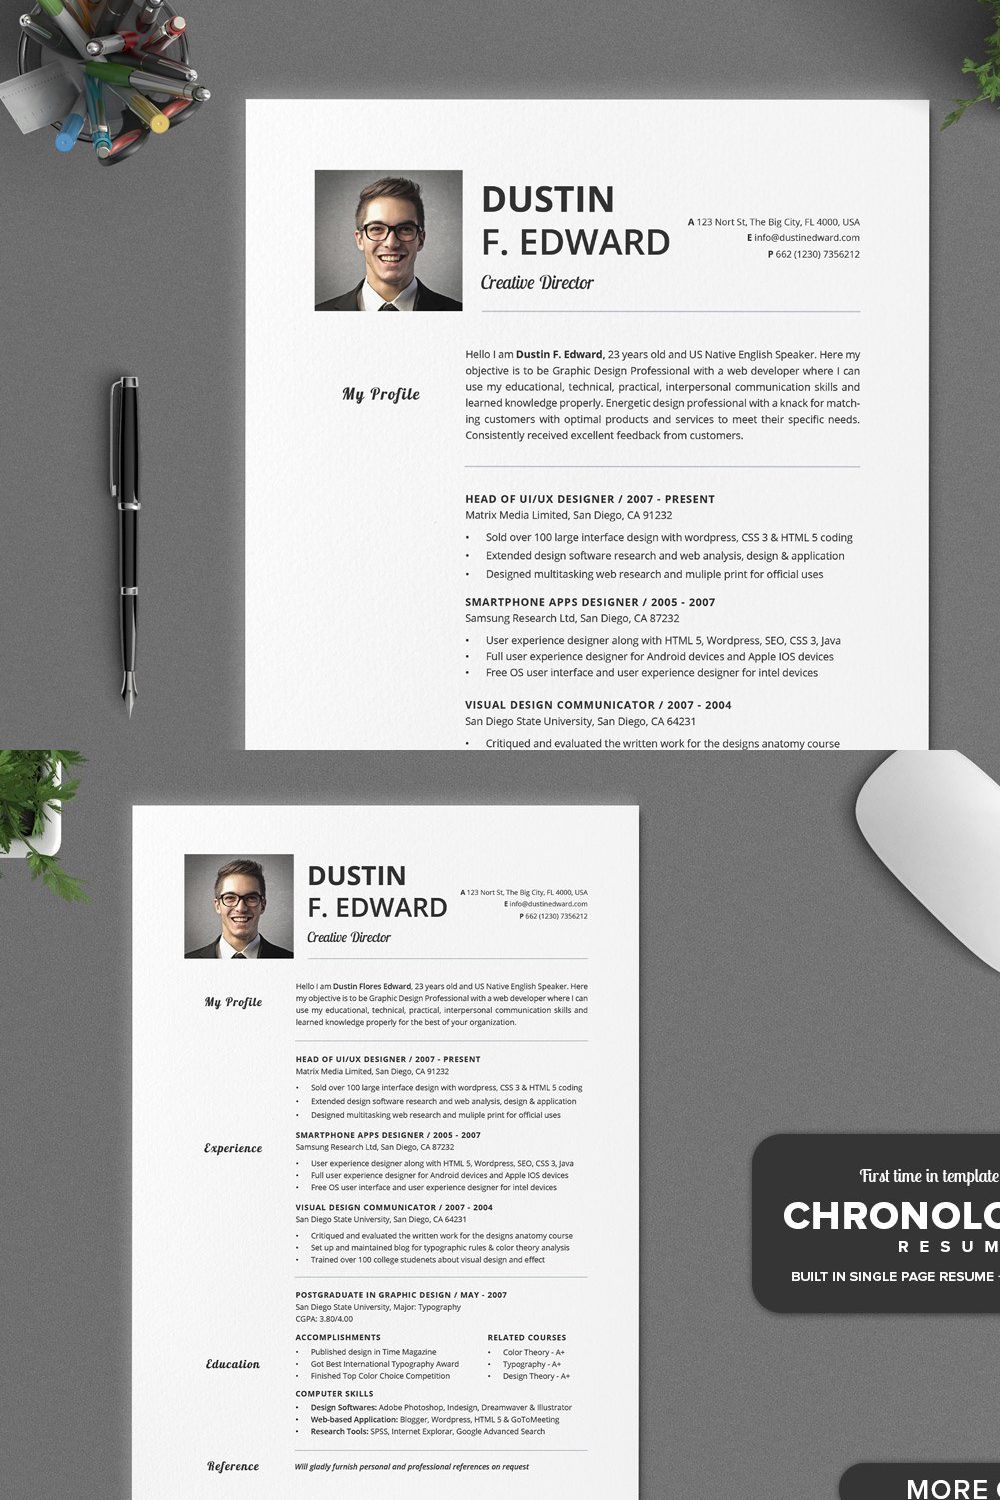 21 Timeless Resume CV Set No Icons pinterest preview image.